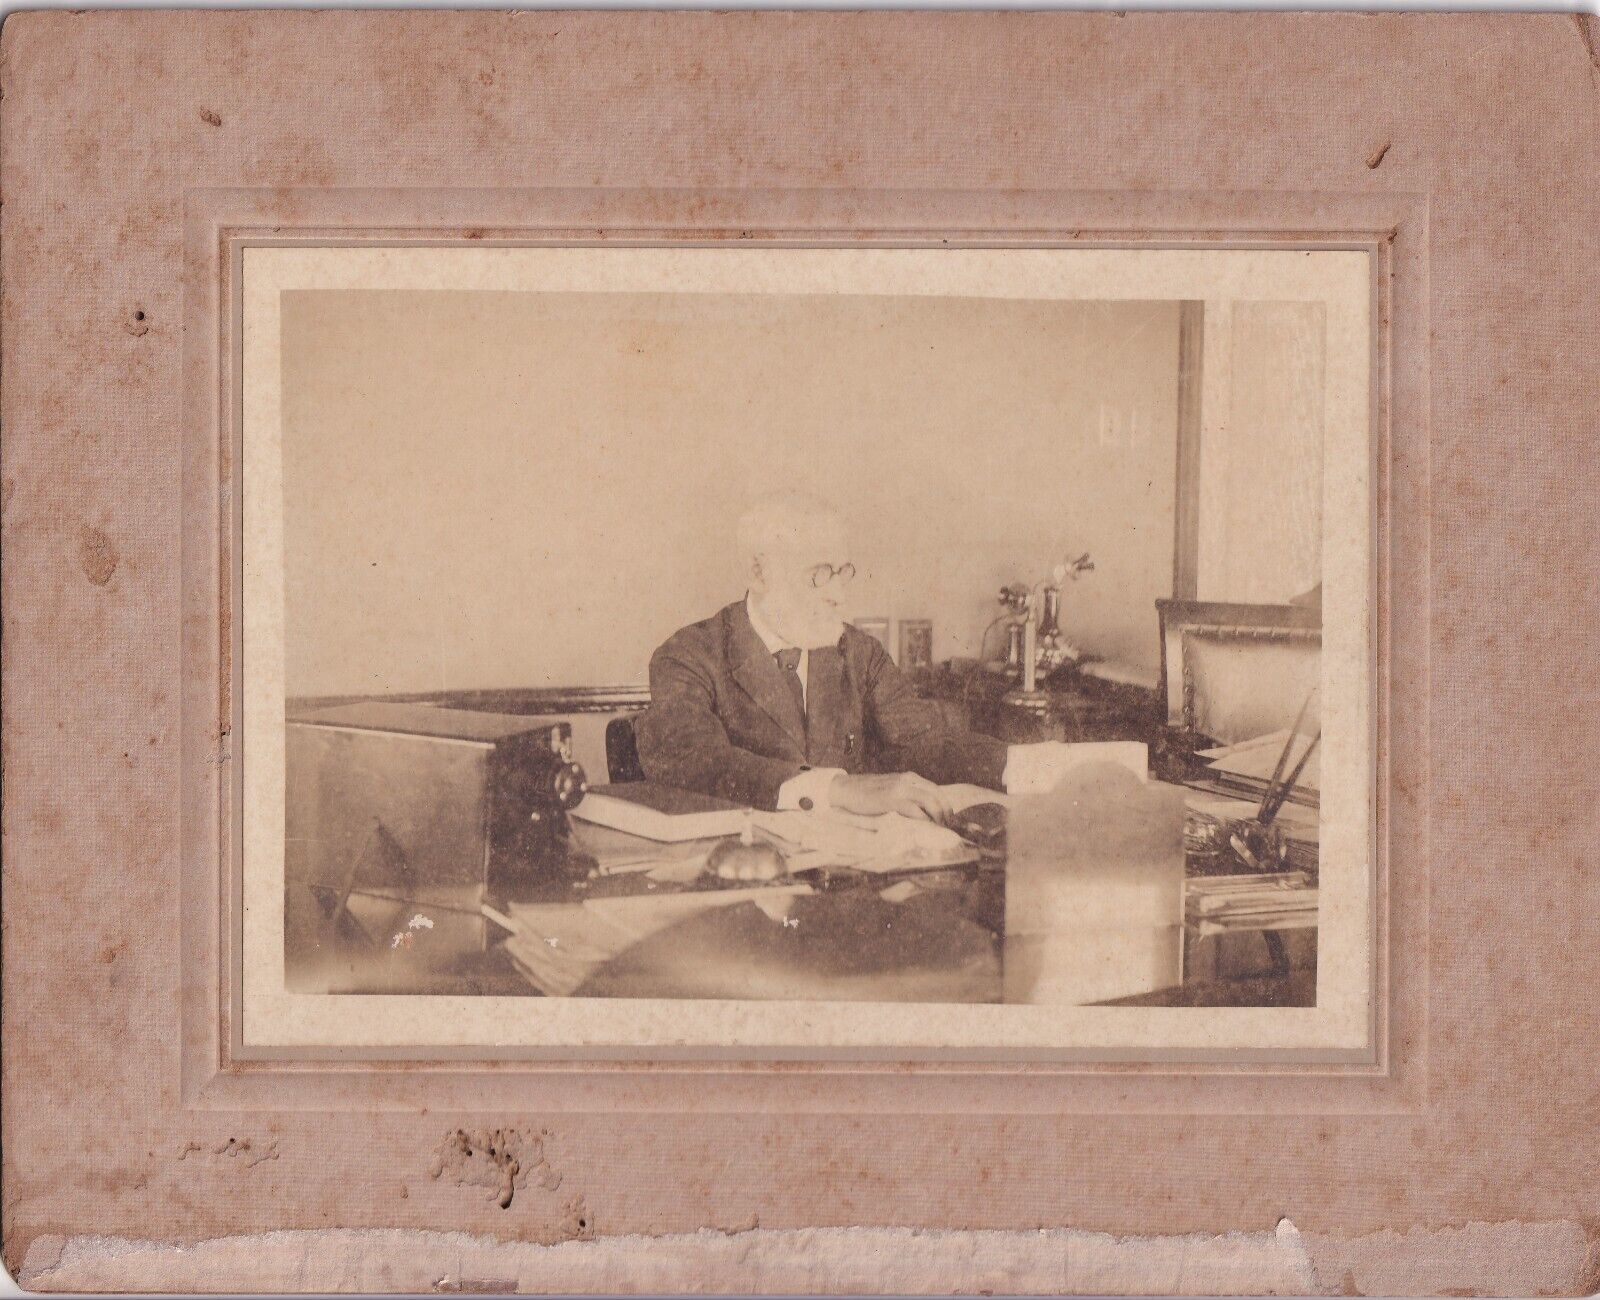 CUBAN OUTSTANDING DOCTOR JUAN GUITERAS AT WORK CUBA CVD 1900s OLD Photo Y 433